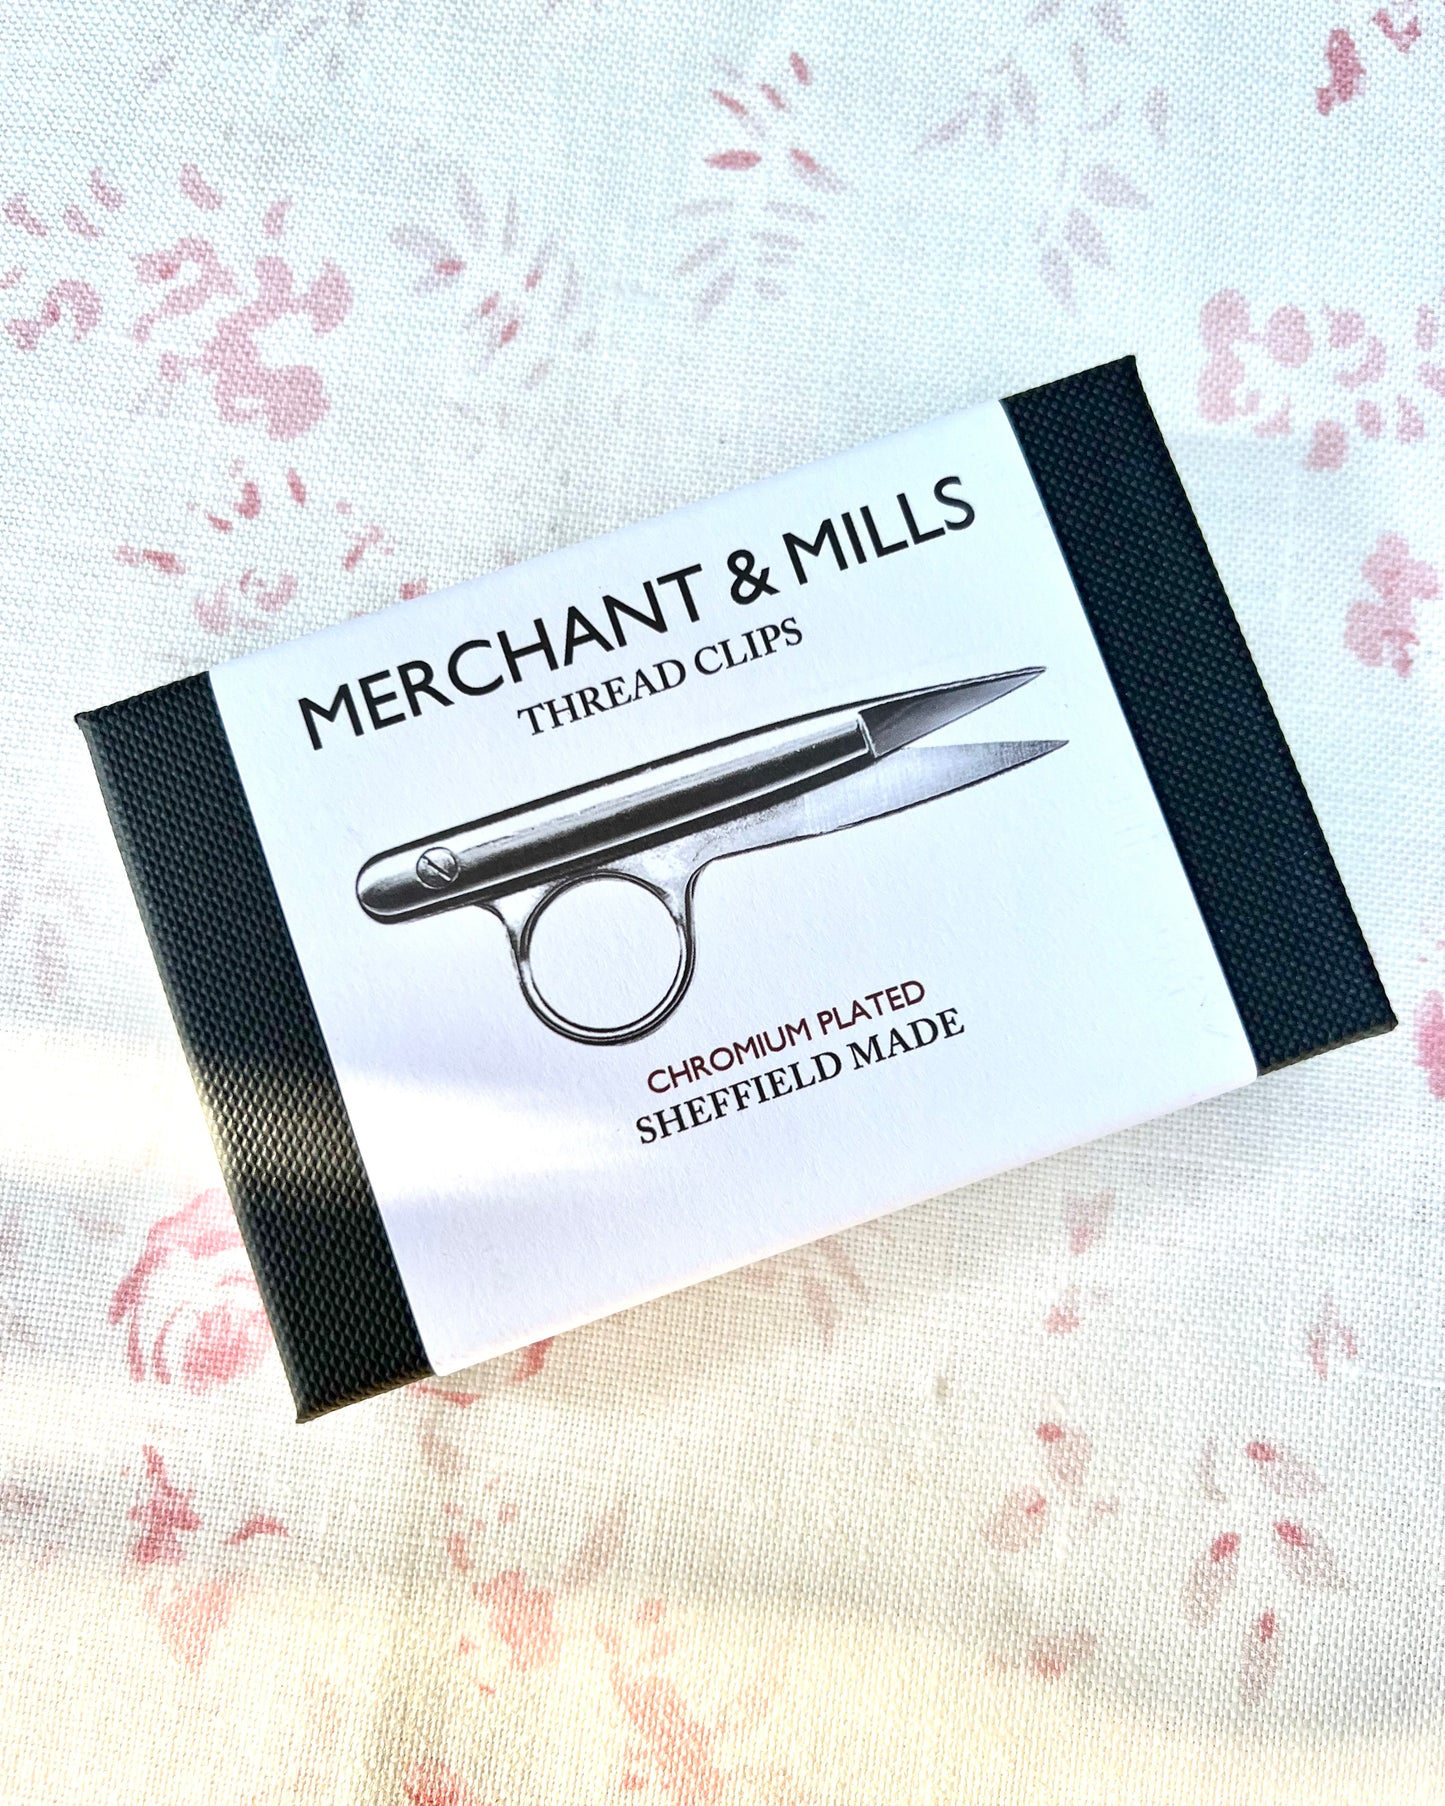 Merchant & Mills - Thread Clips